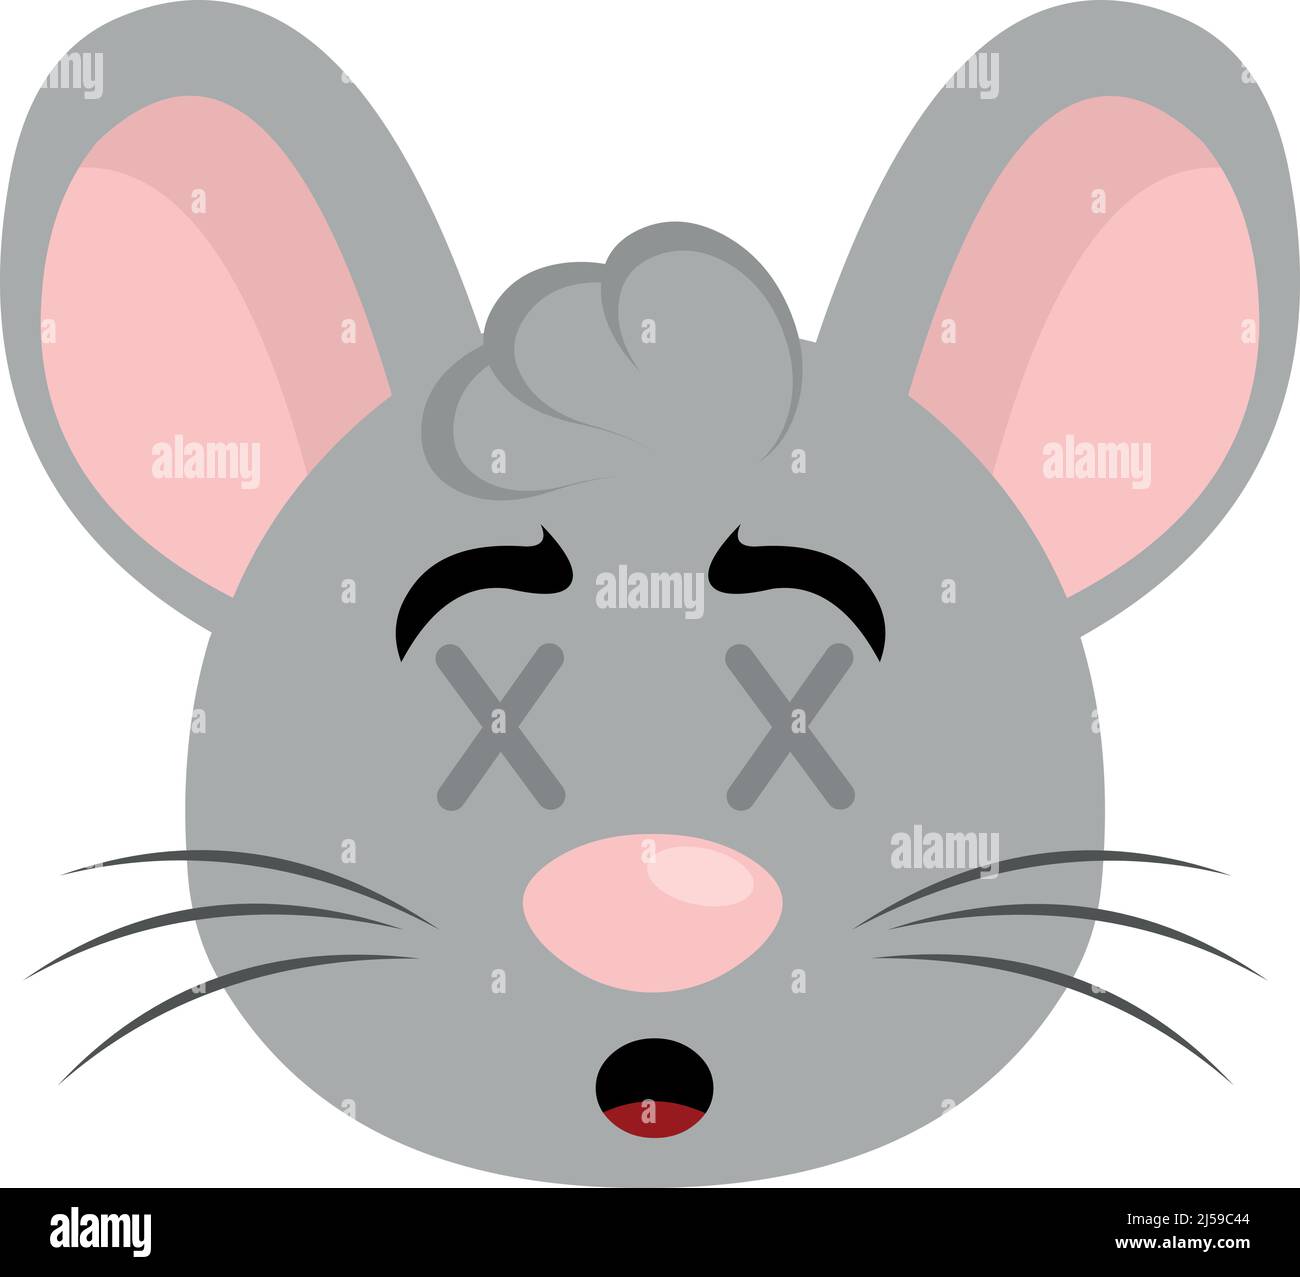 Rata muerta Imágenes vectoriales de stock - Alamy